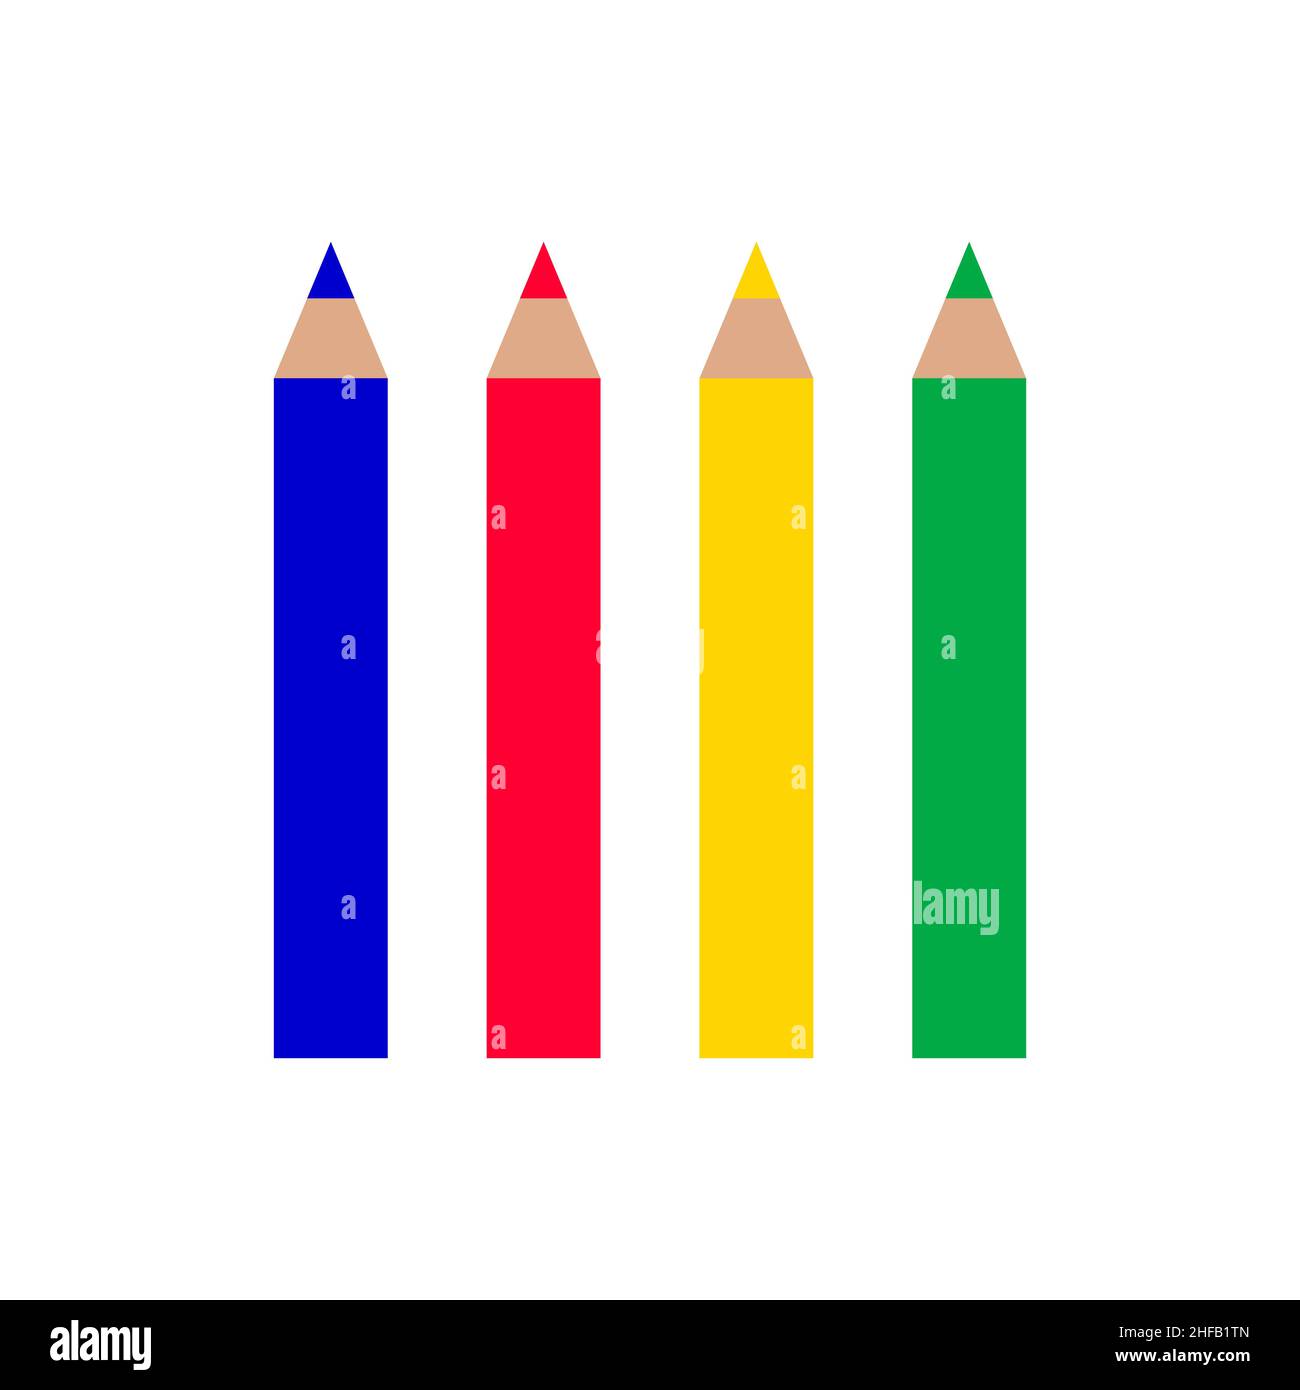 Quattro matite colorate. Set di matite colorate blu, rosse, gialle